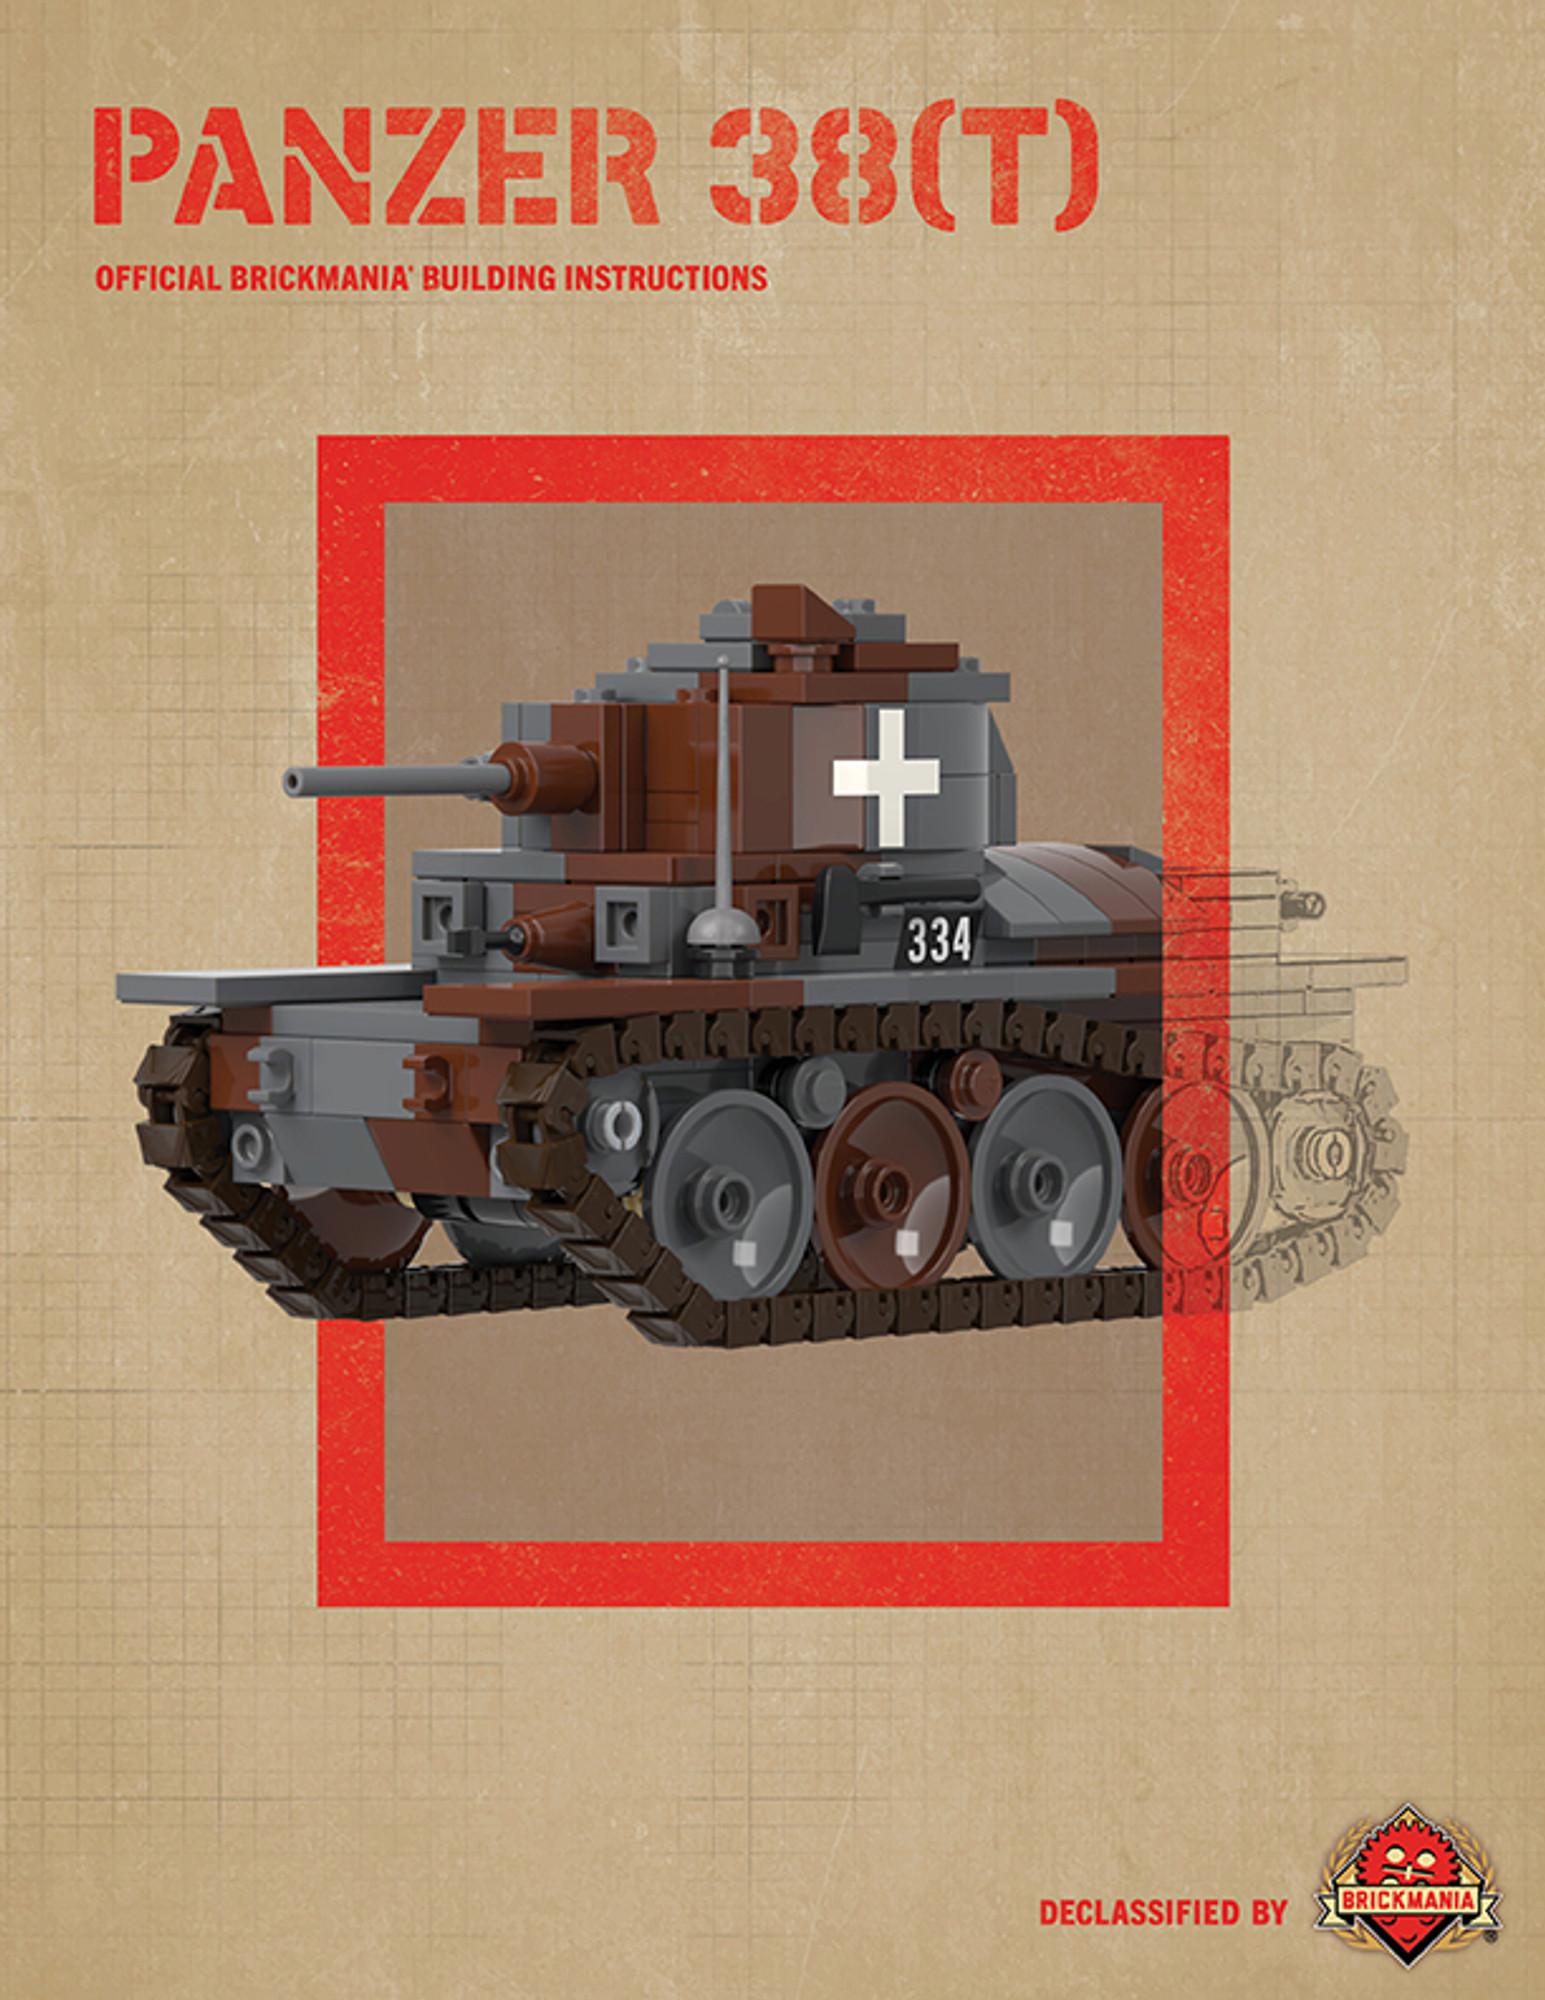 Panzer 38(t) - Digital Building Instructions